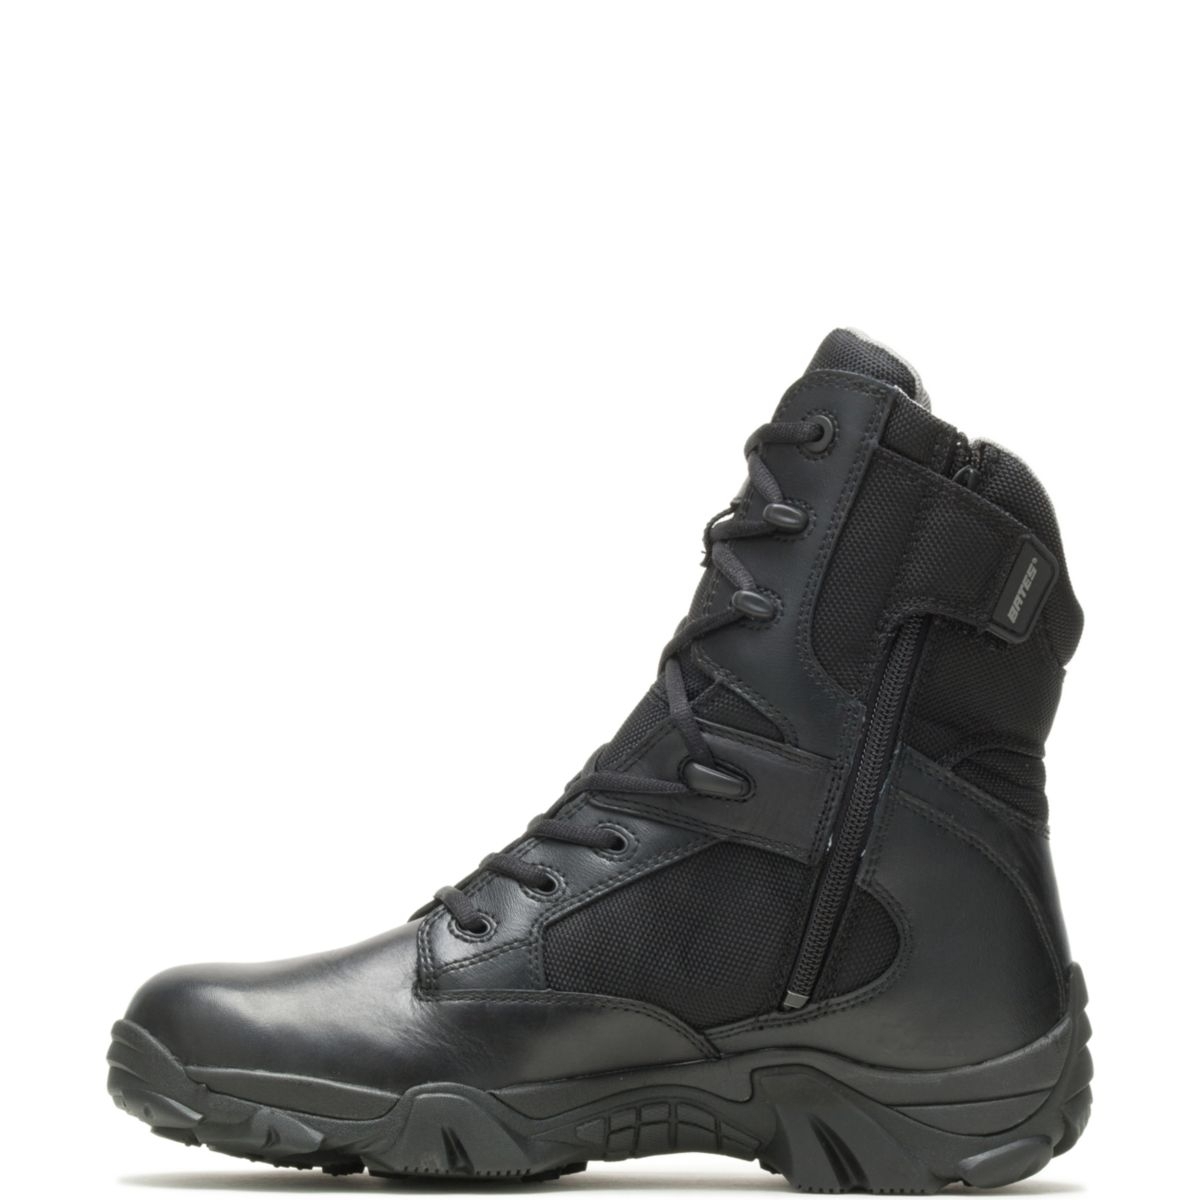 Bates Men's GX-8 Side-Zip GORE-TEXÂ® Waterproof Boot Black - E02268 BLACK - BLACK, 10.5-M